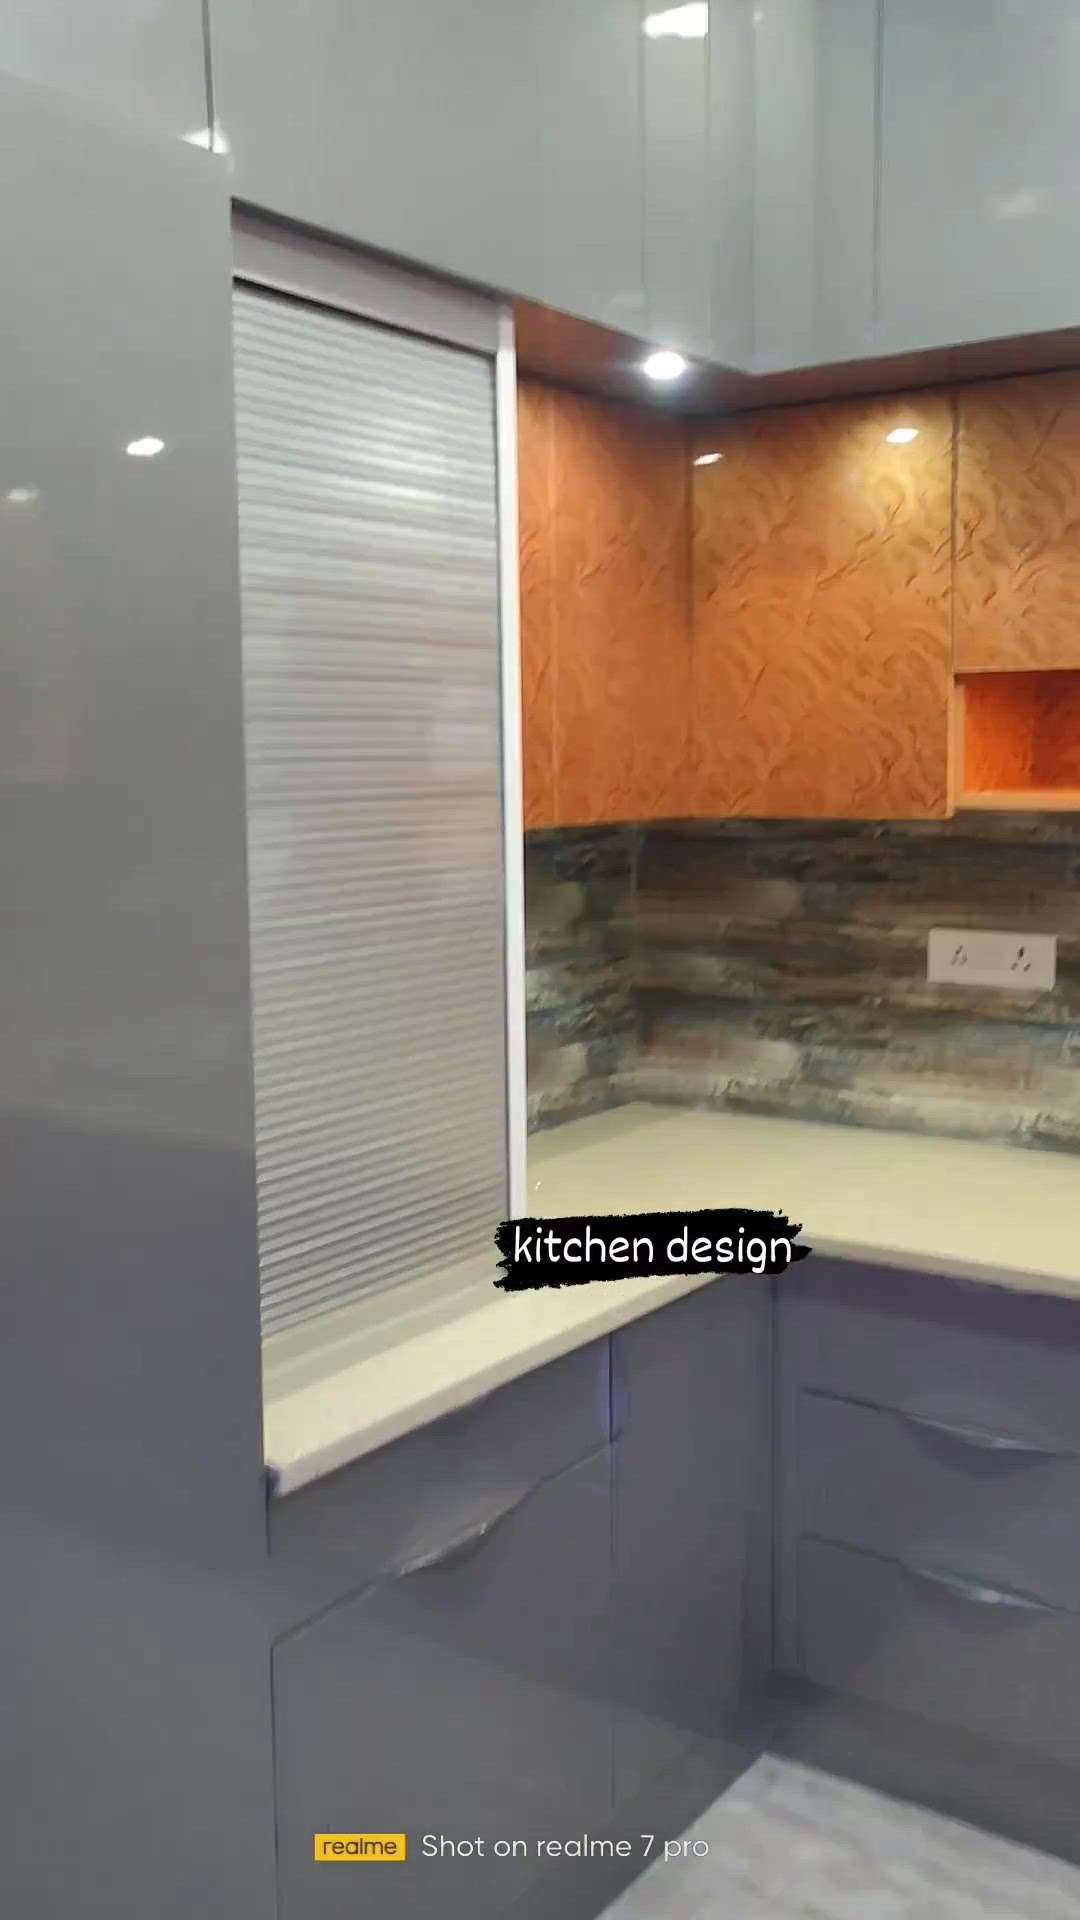 modular kitchen with reasonable price 
 #KitchenIdeas  #LShapeKitchen #KitchenCabinet #KitchenInterior #InteriorDesigner #Architectural&Interior